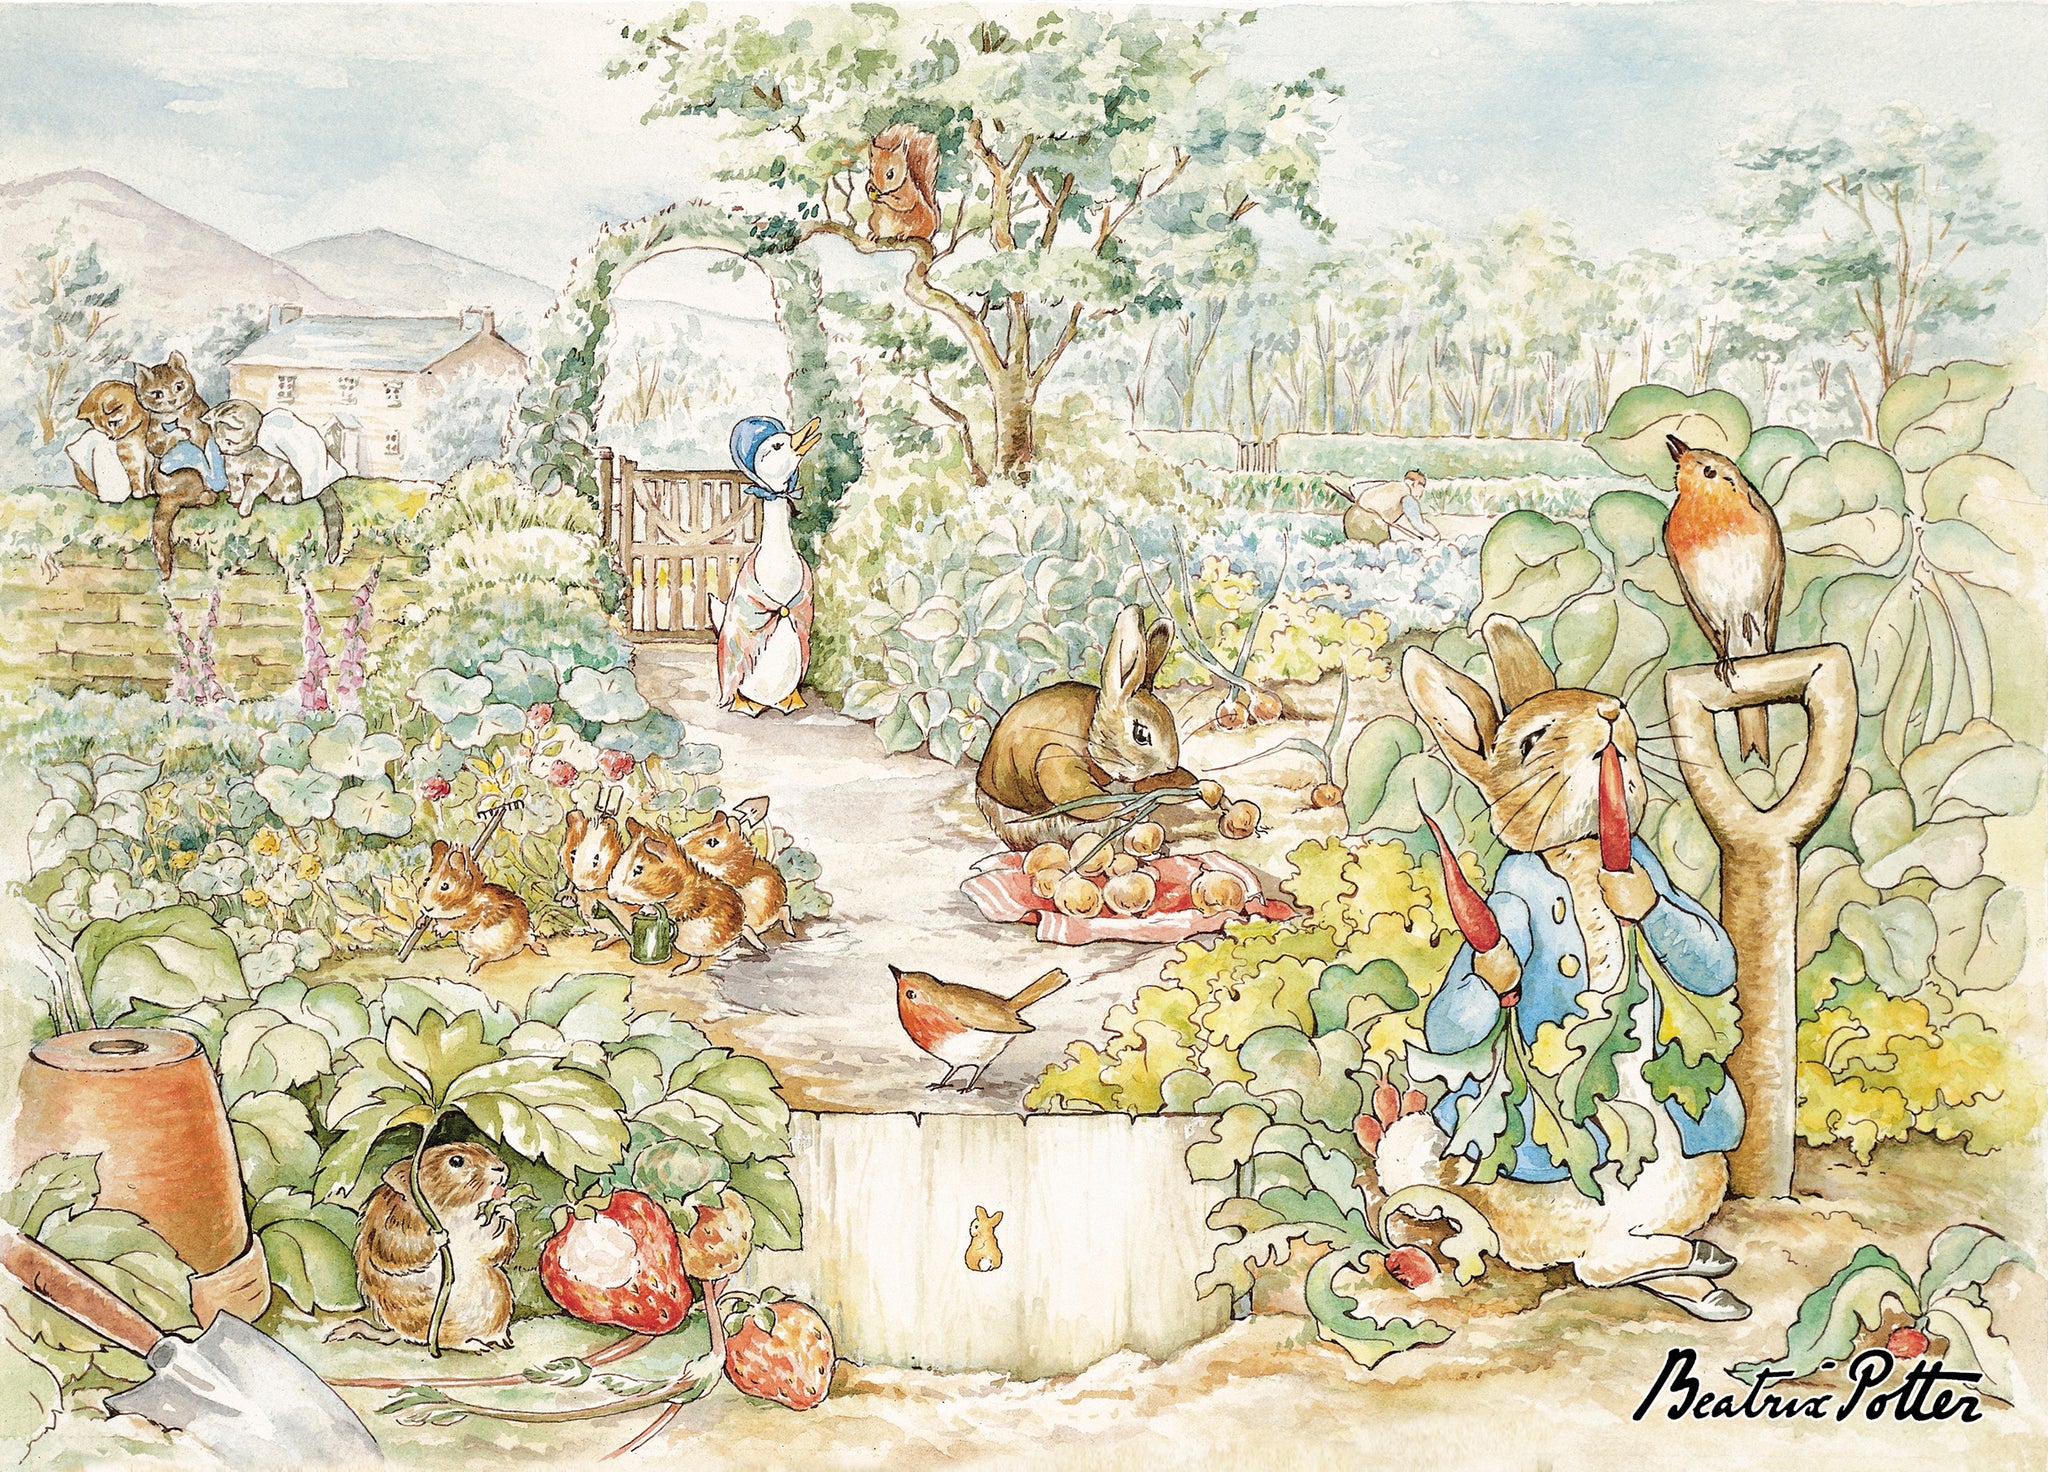 Beatrix Potter The Tale of Peter Rabbit Placemat